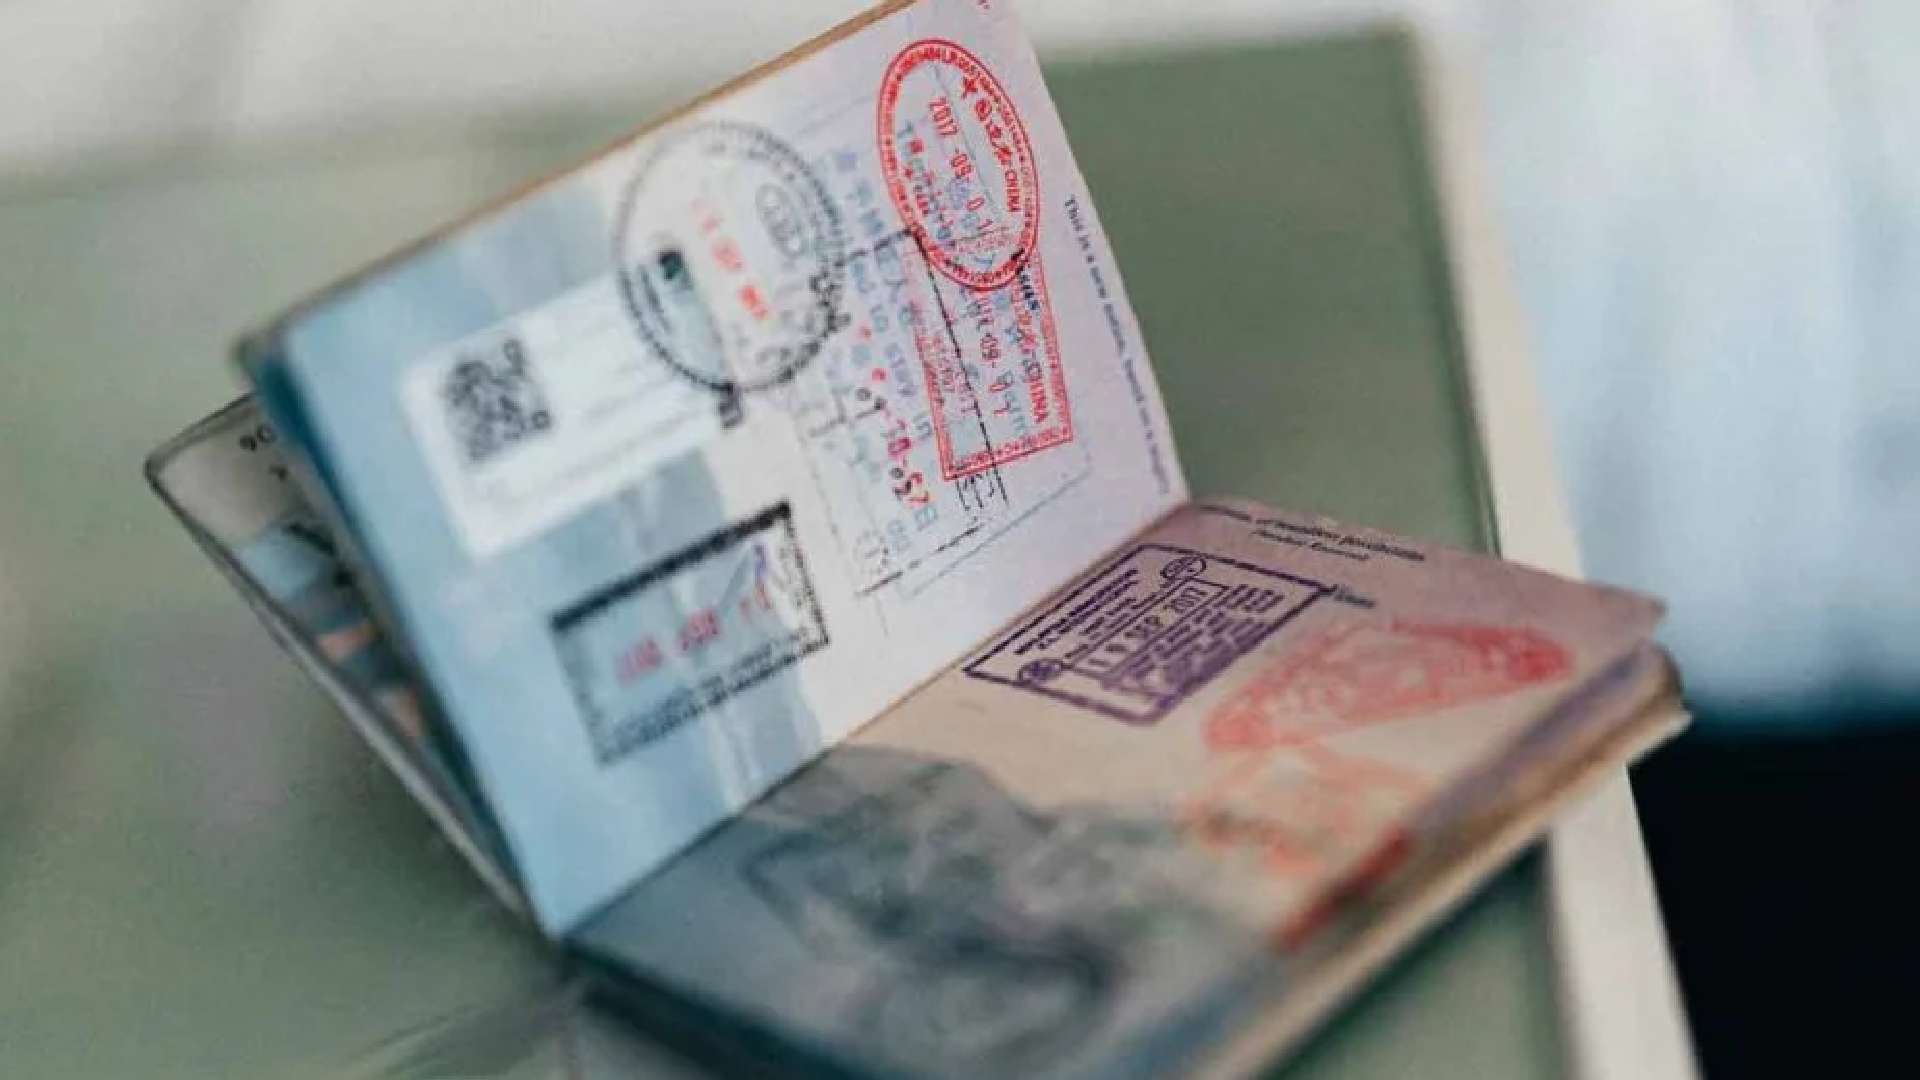 Bahrain visa check online by passport number